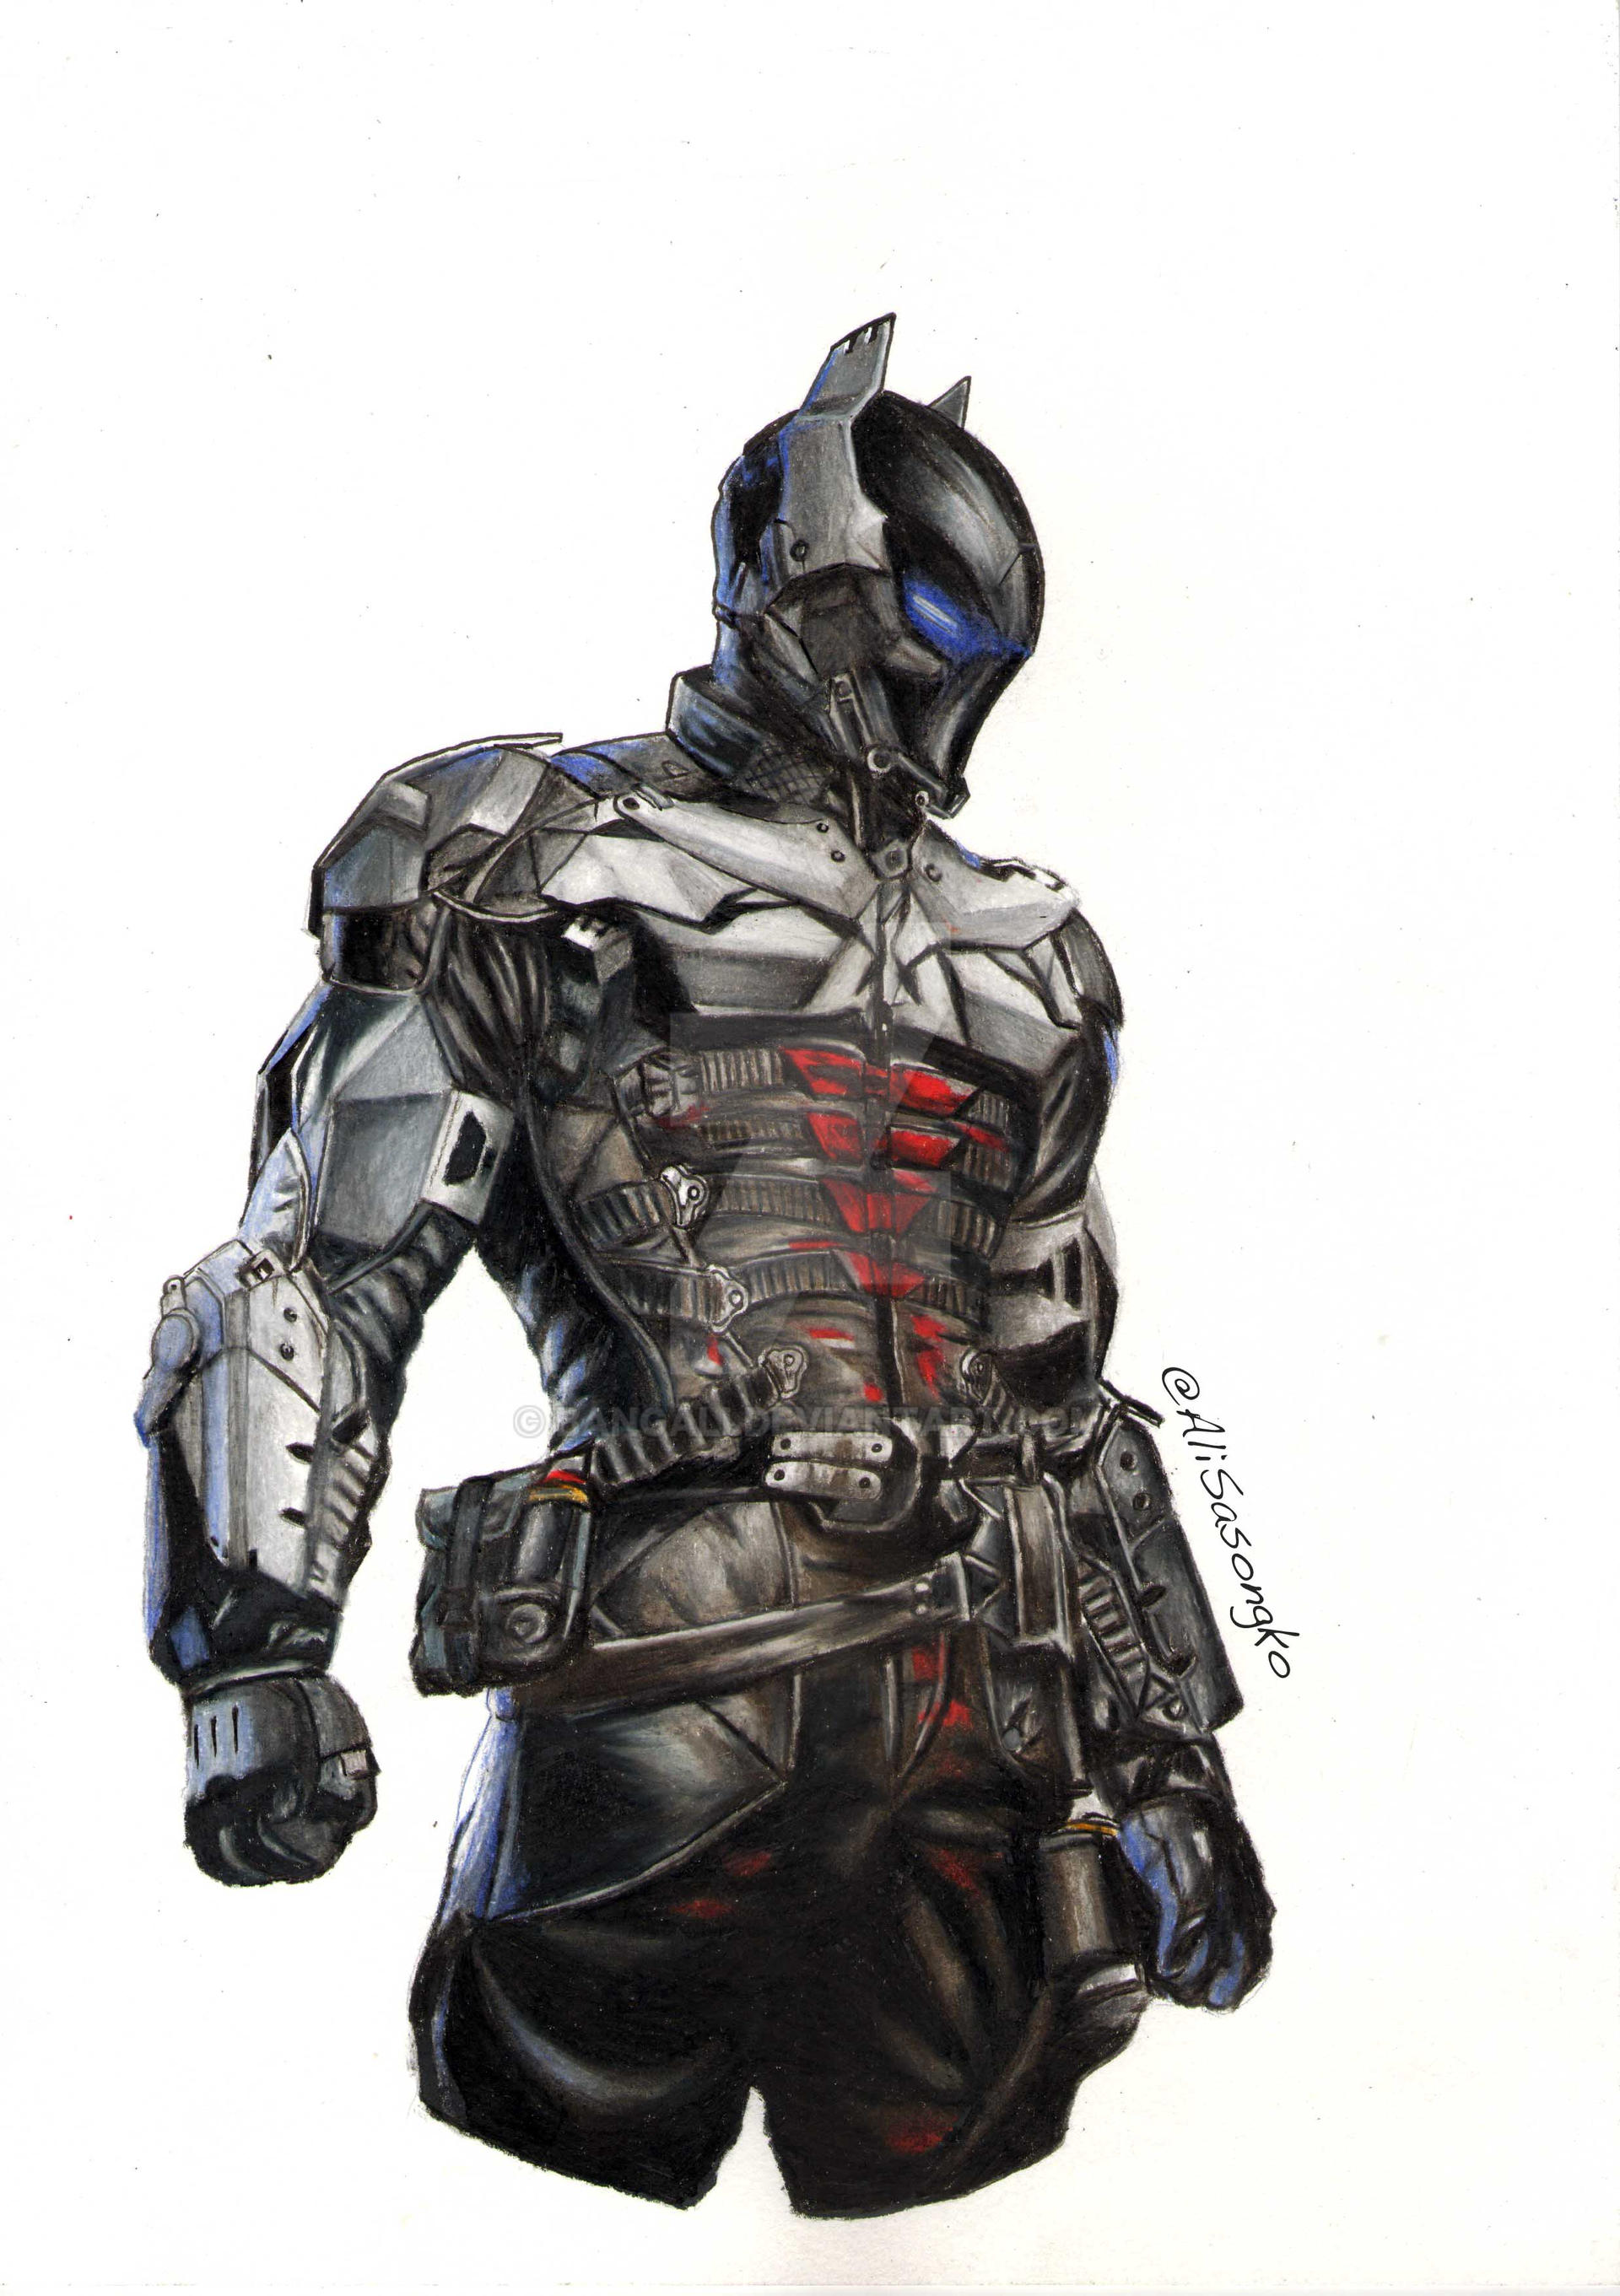 Batman Arkham knight armor by bangali on DeviantArt